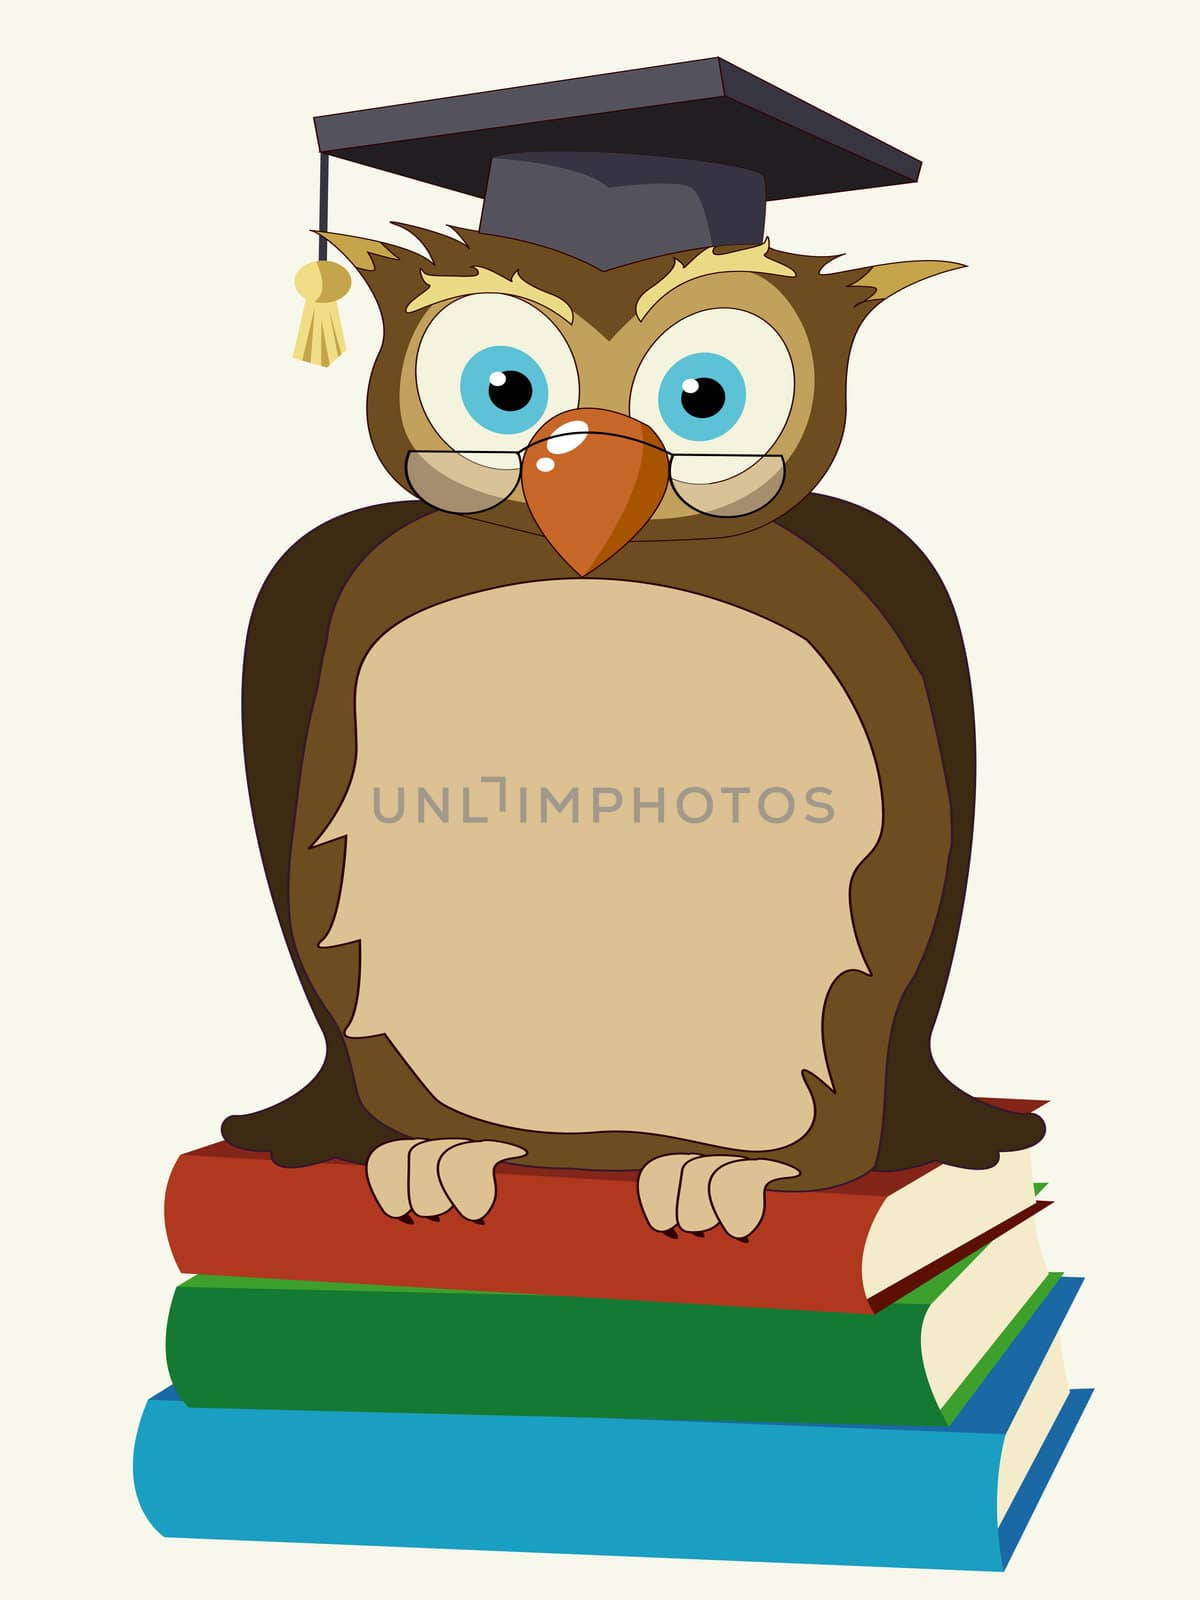 Wise owl by Lirch